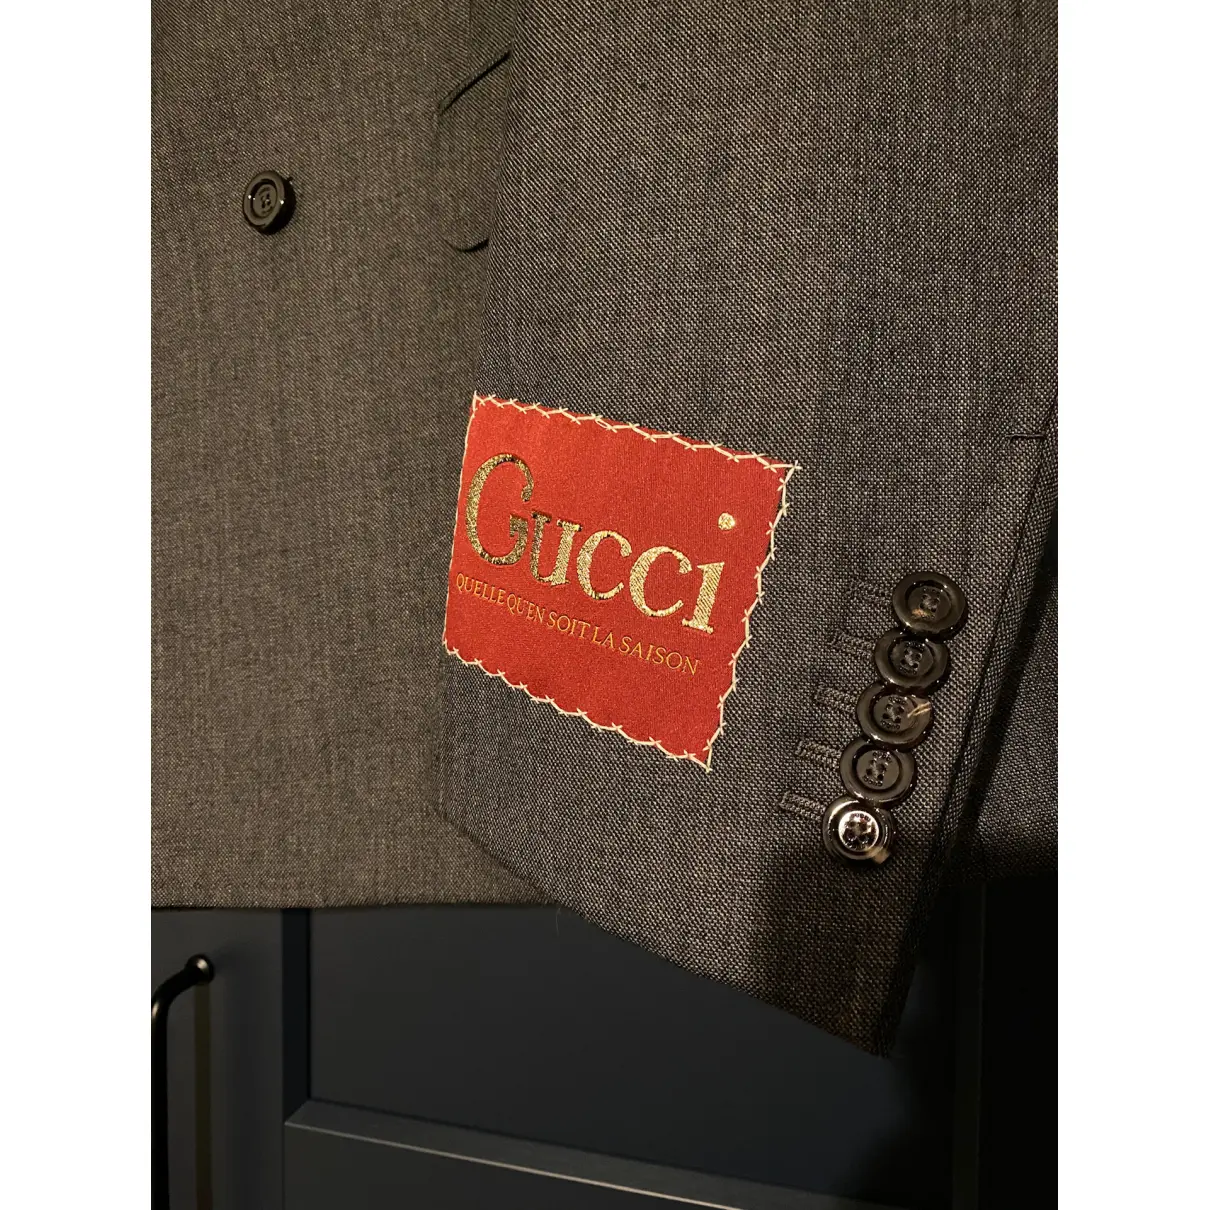 Buy Gucci Wool vest online